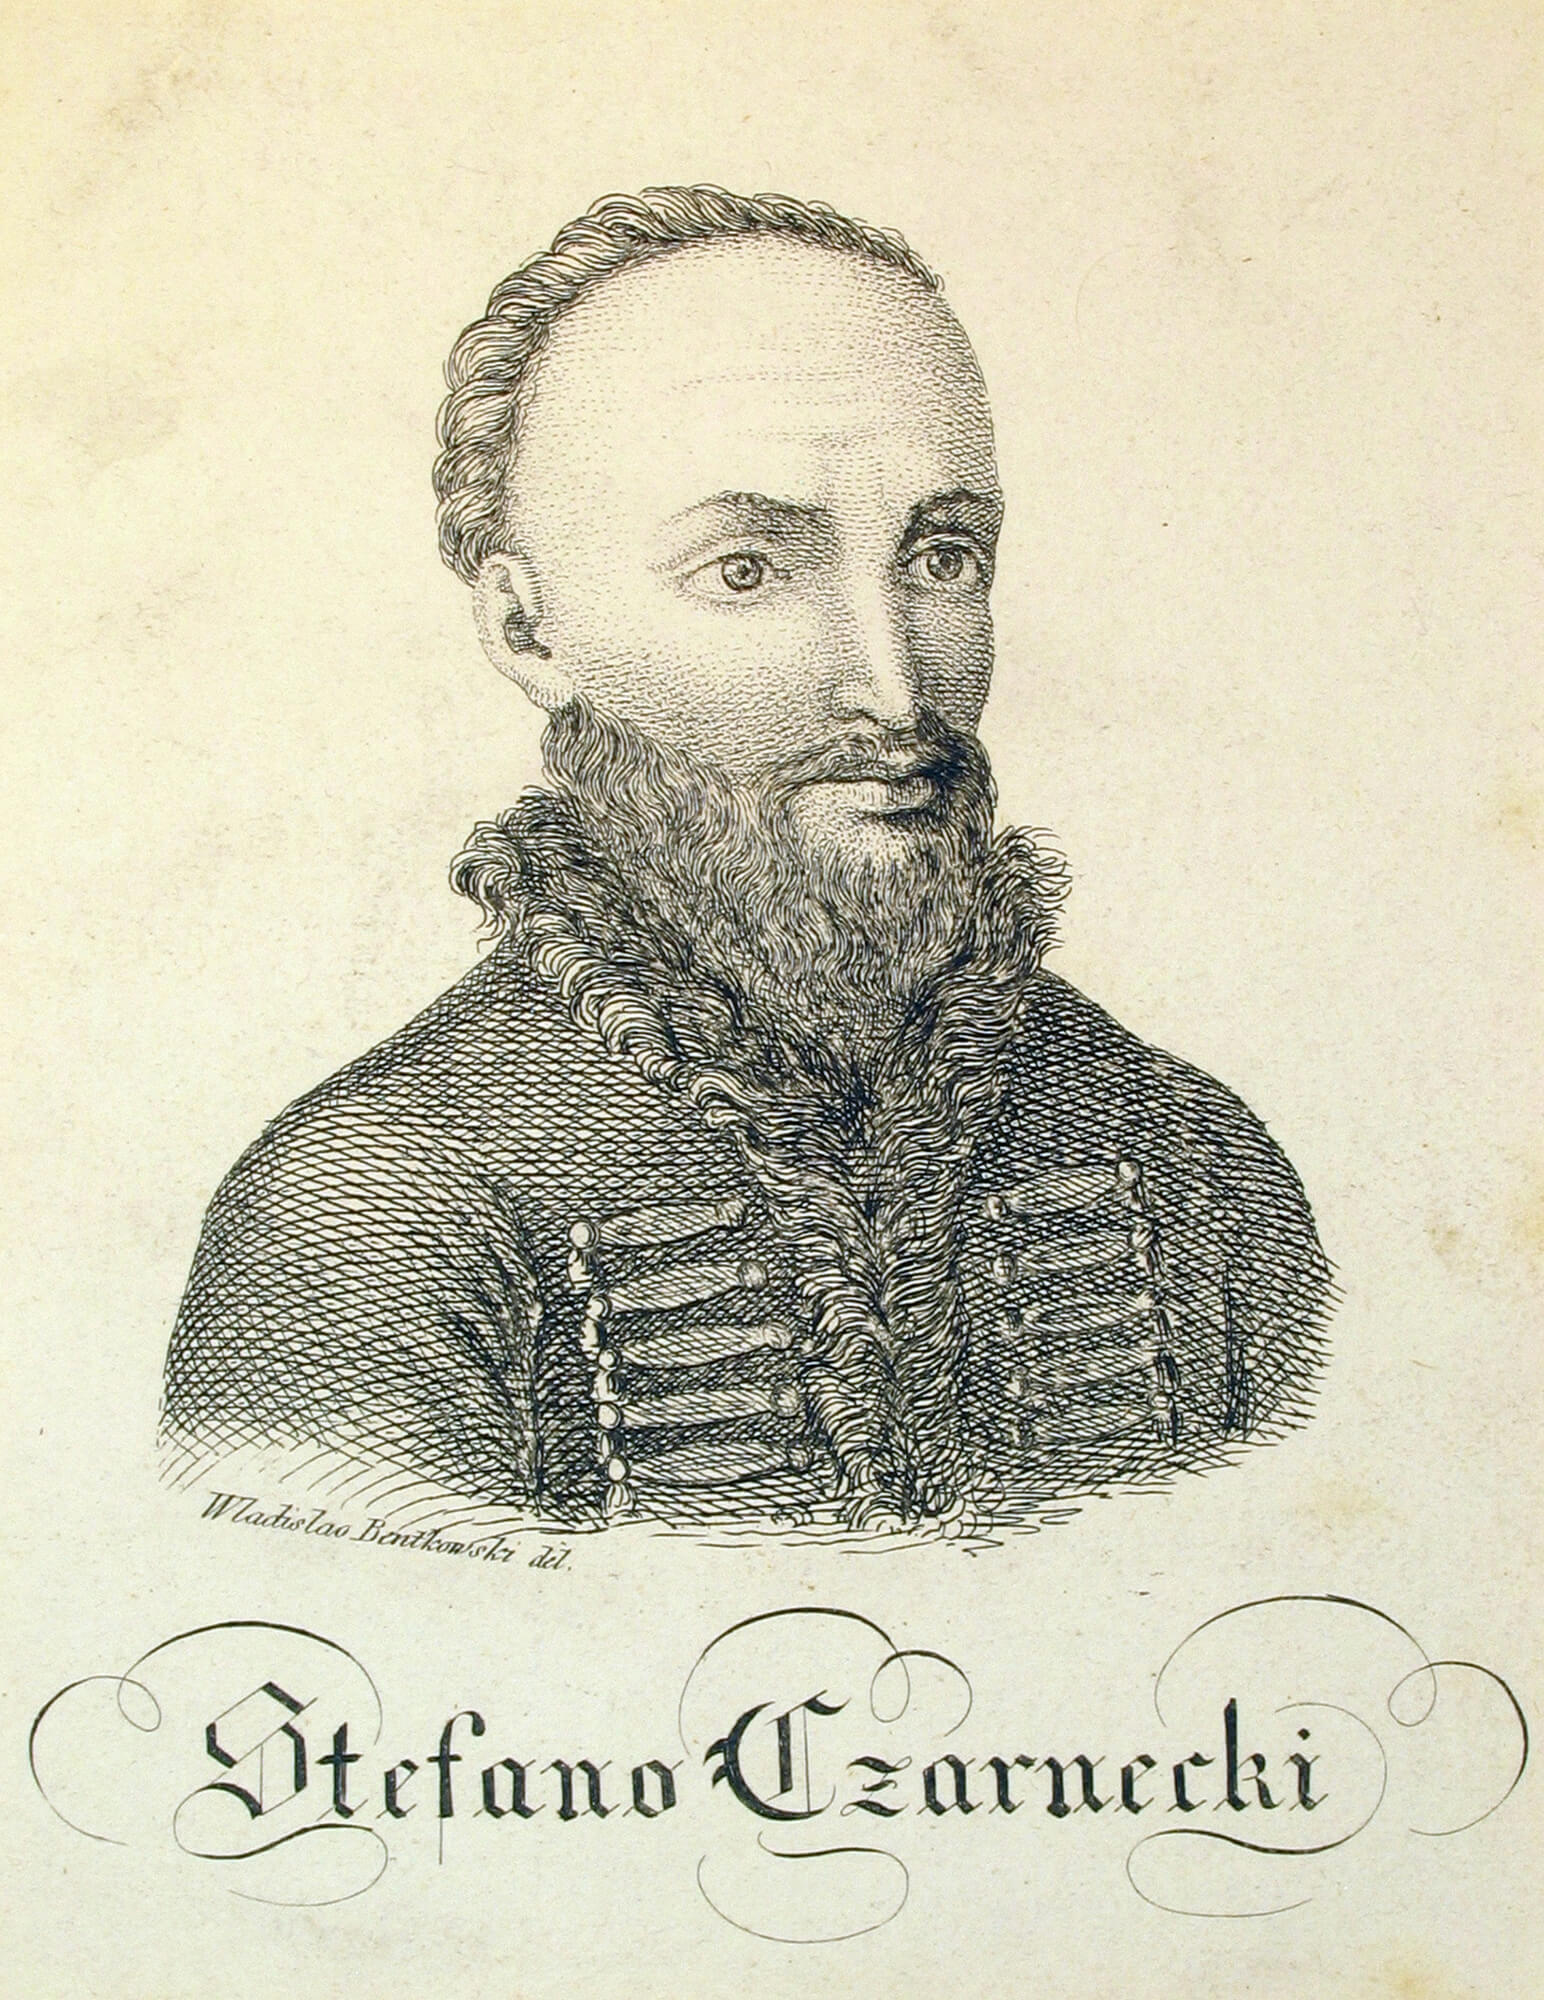 Stefan Czarniecki (1599-1665)